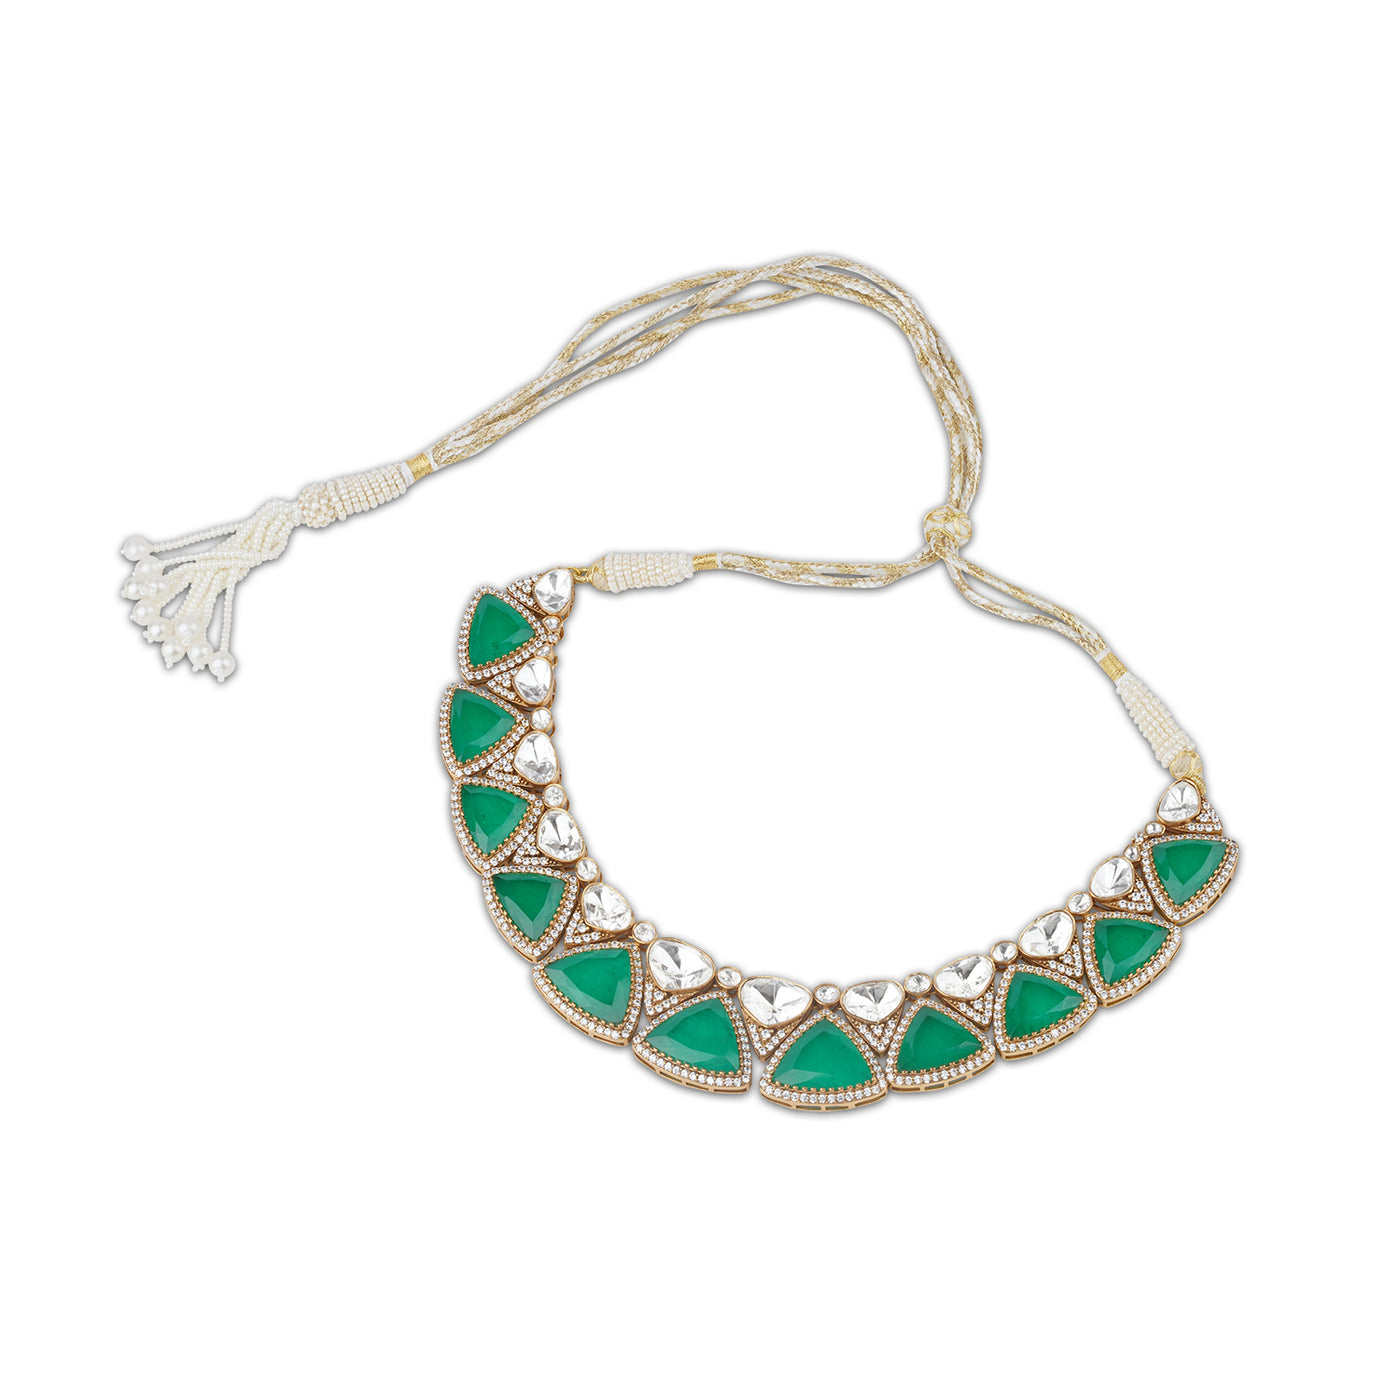 Fazzilet - Polki and American diamond necklace set